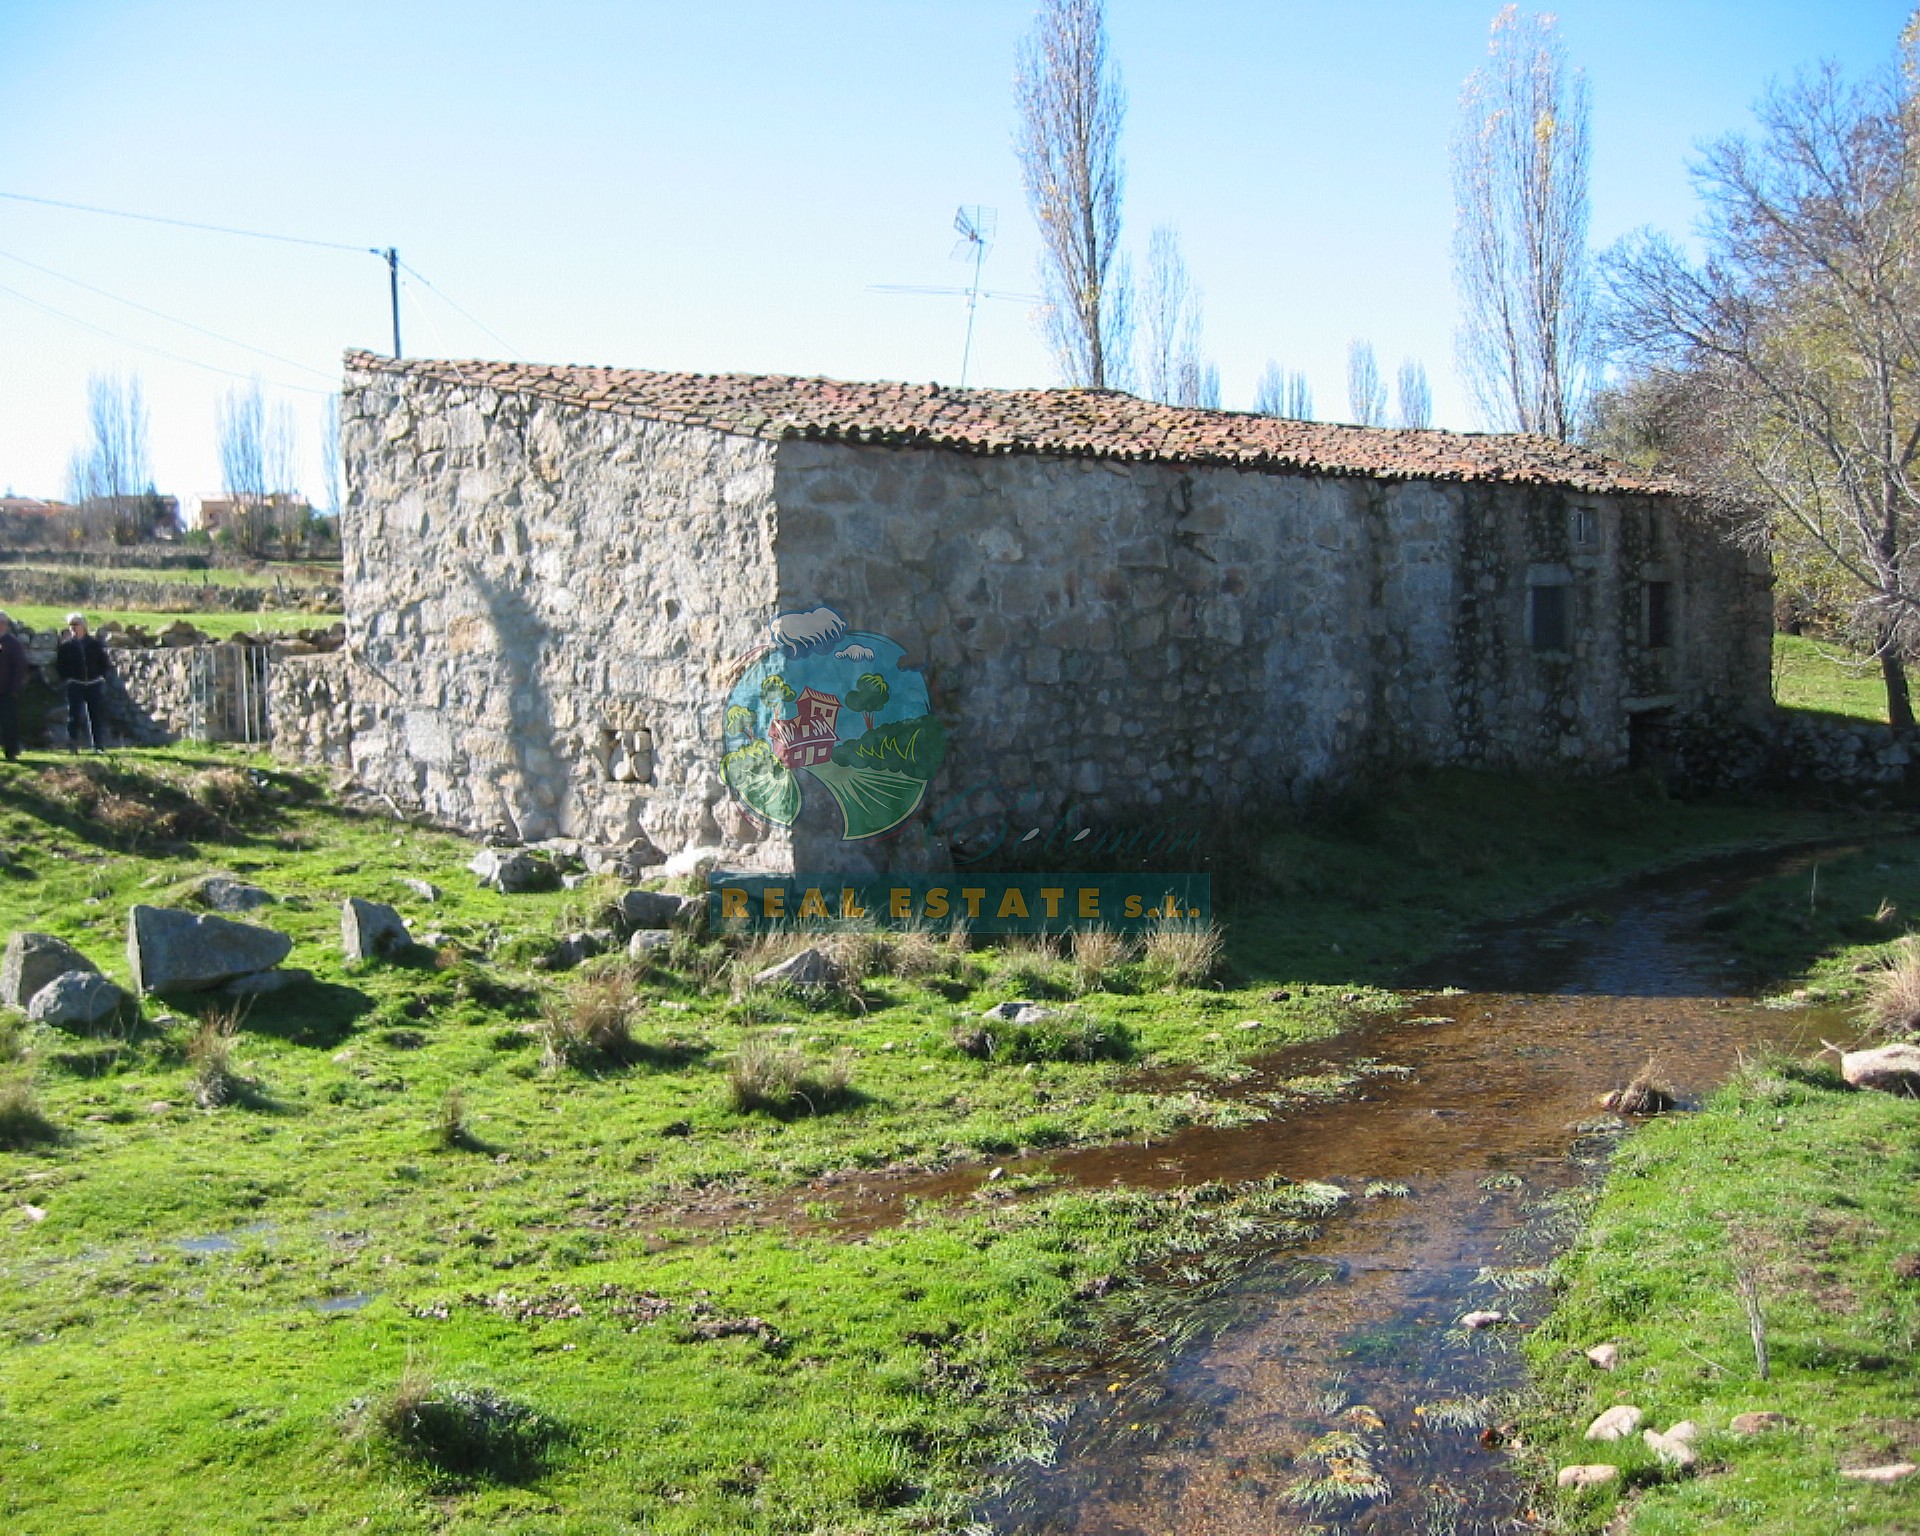 Water mill needs rehabilitation in Sierra de Gredos.